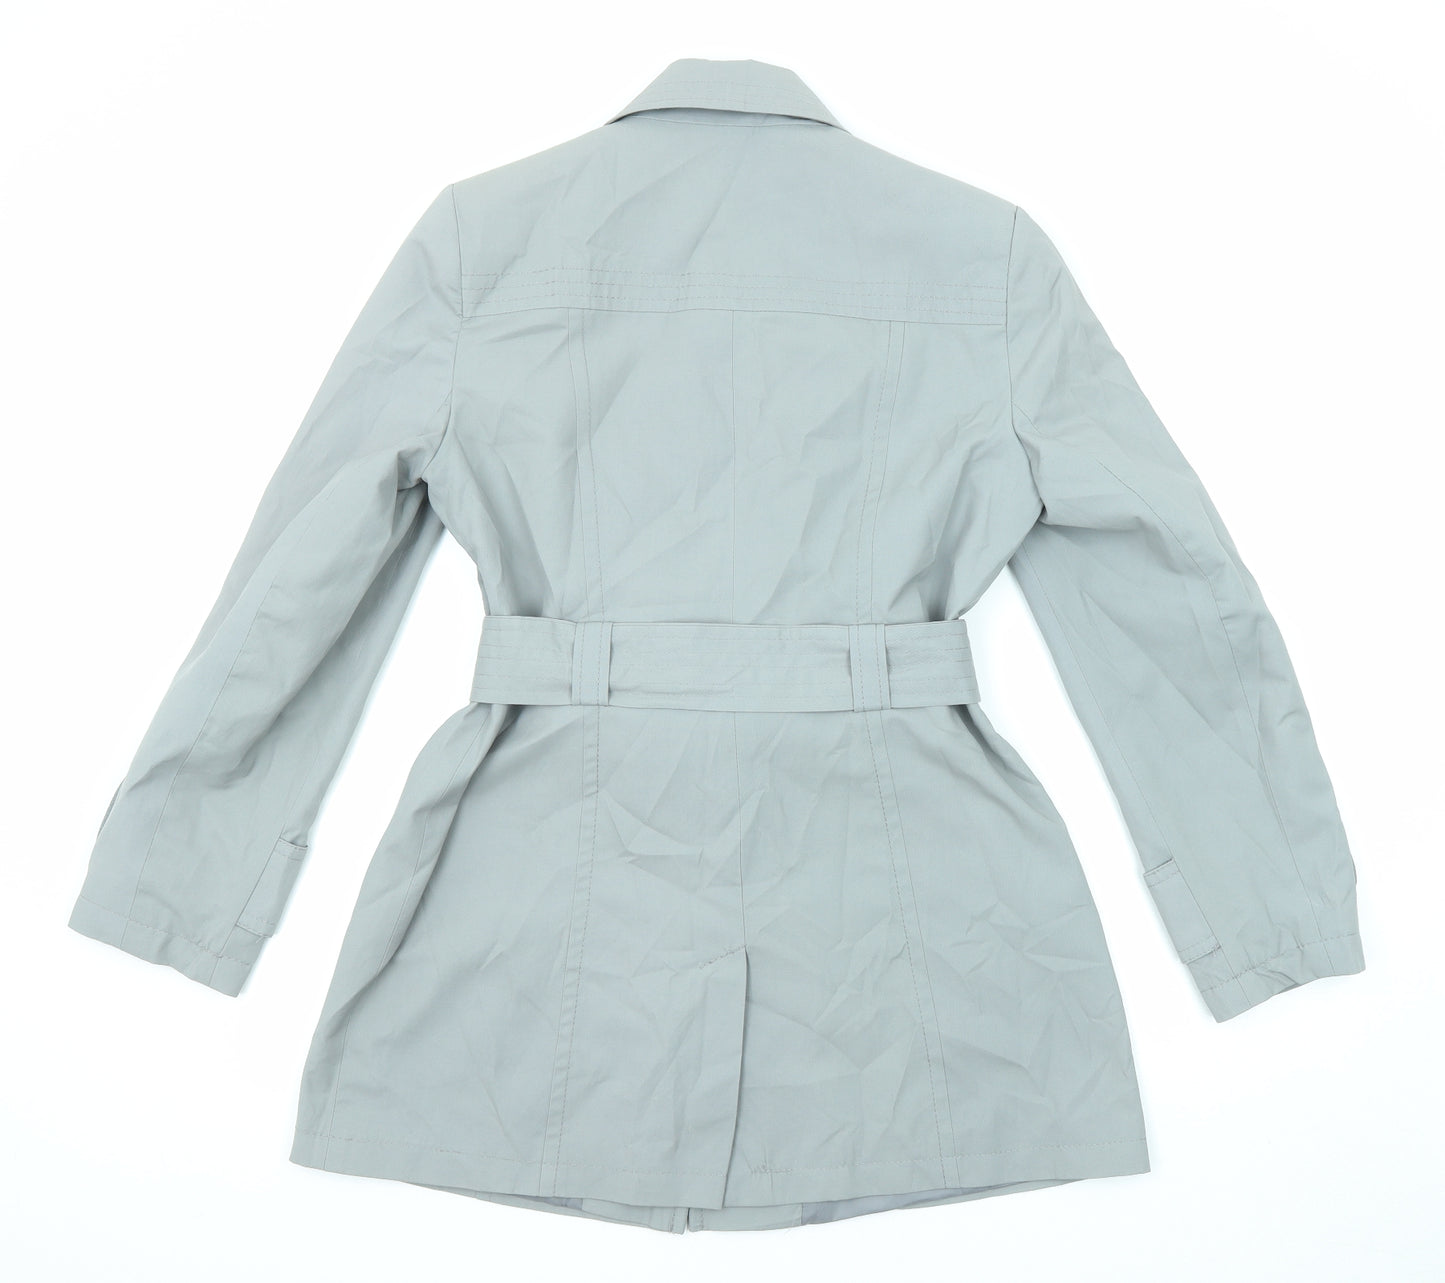 BHS Womens Grey Pea Coat Coat Size 12 Button